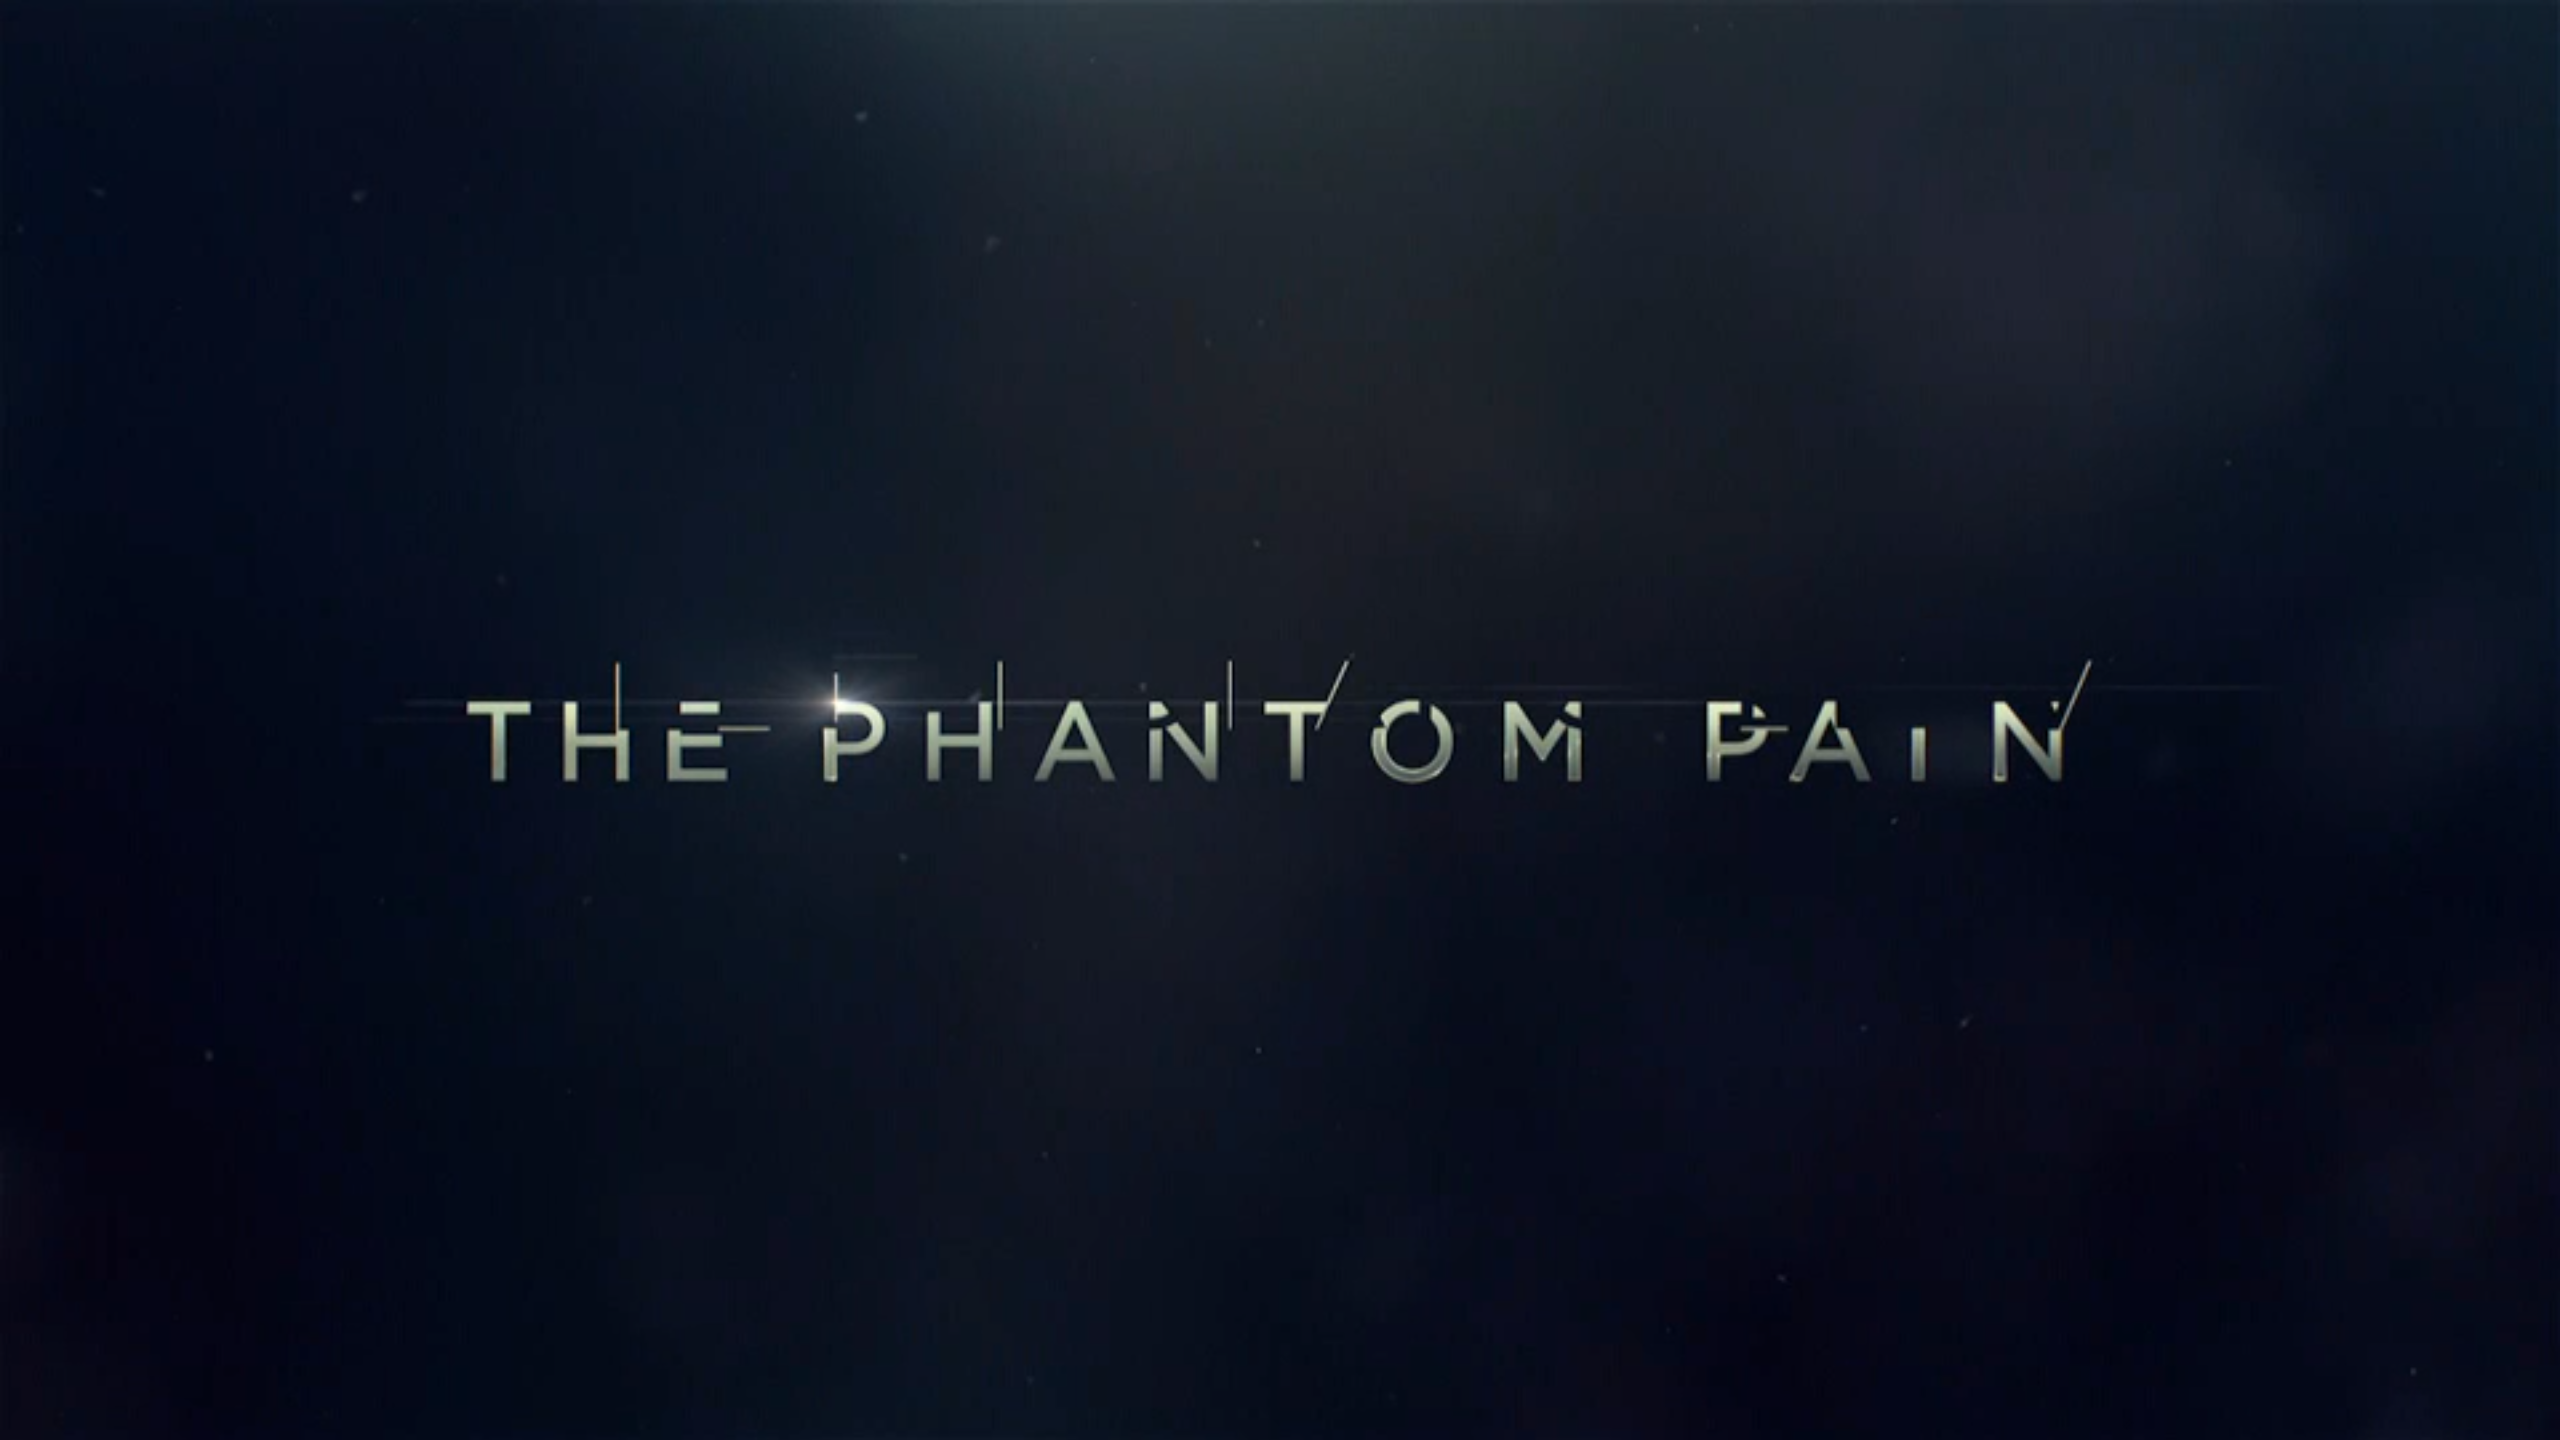 Metal Gear Solid 5 The Phantom Pain revealed debut trailer